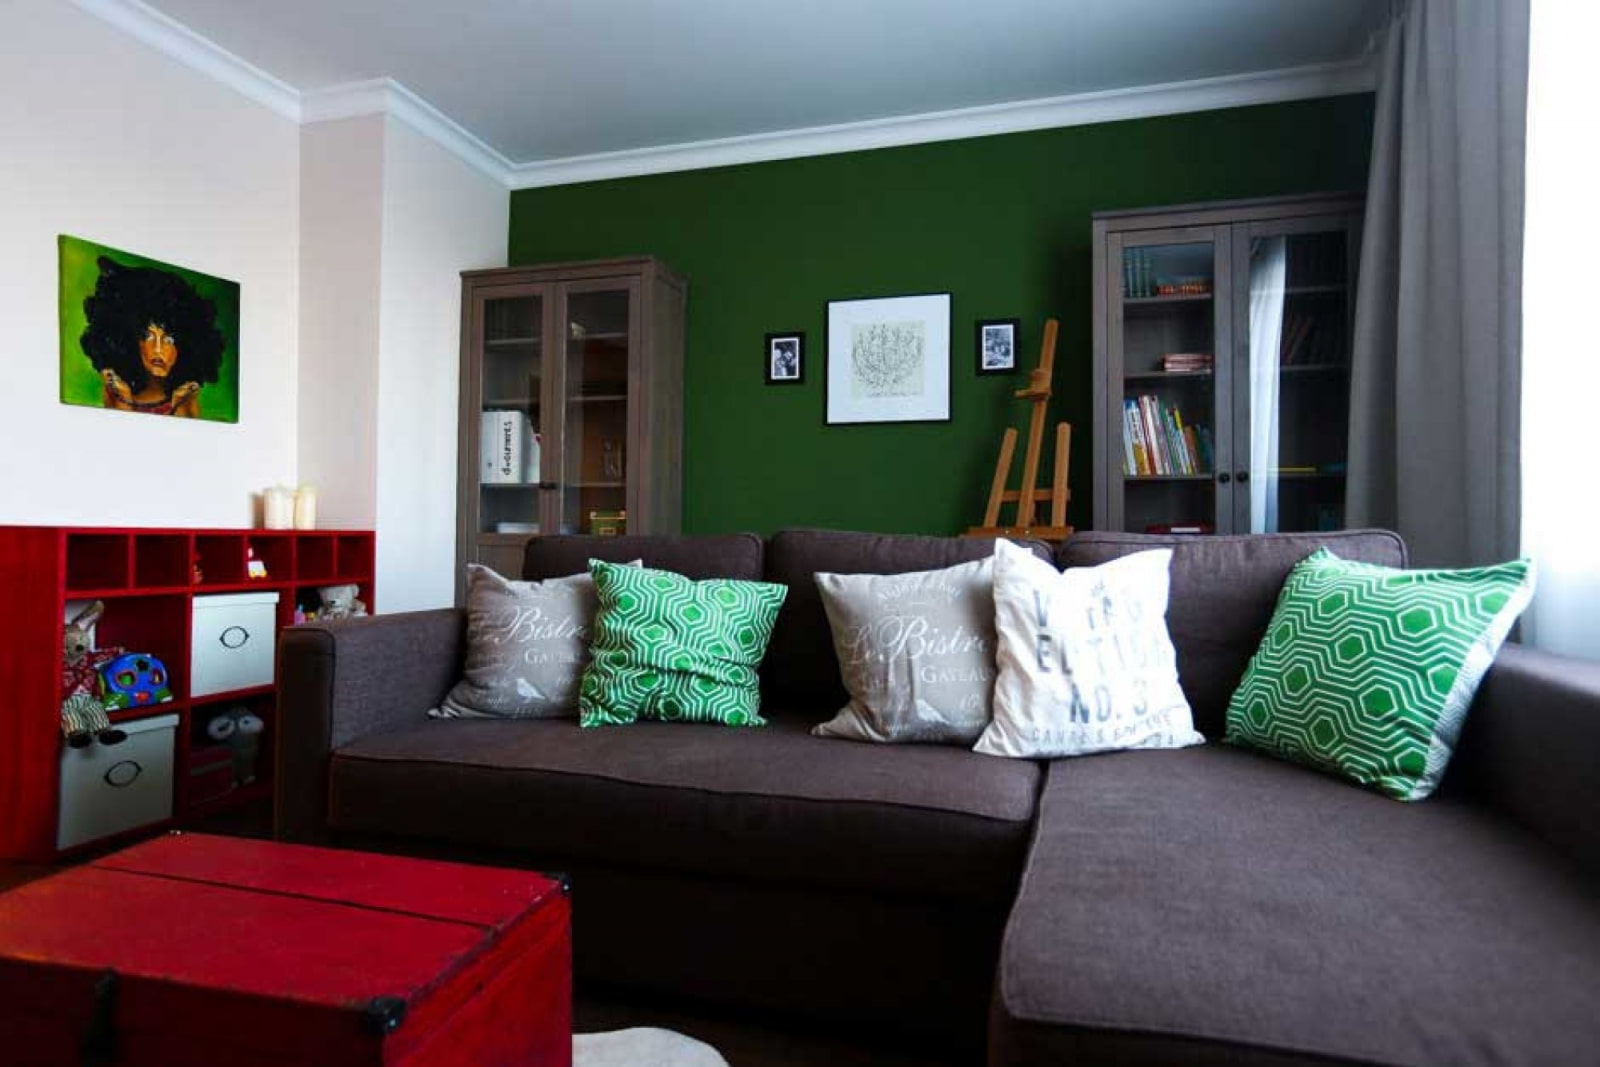 комната с зеленым диваном